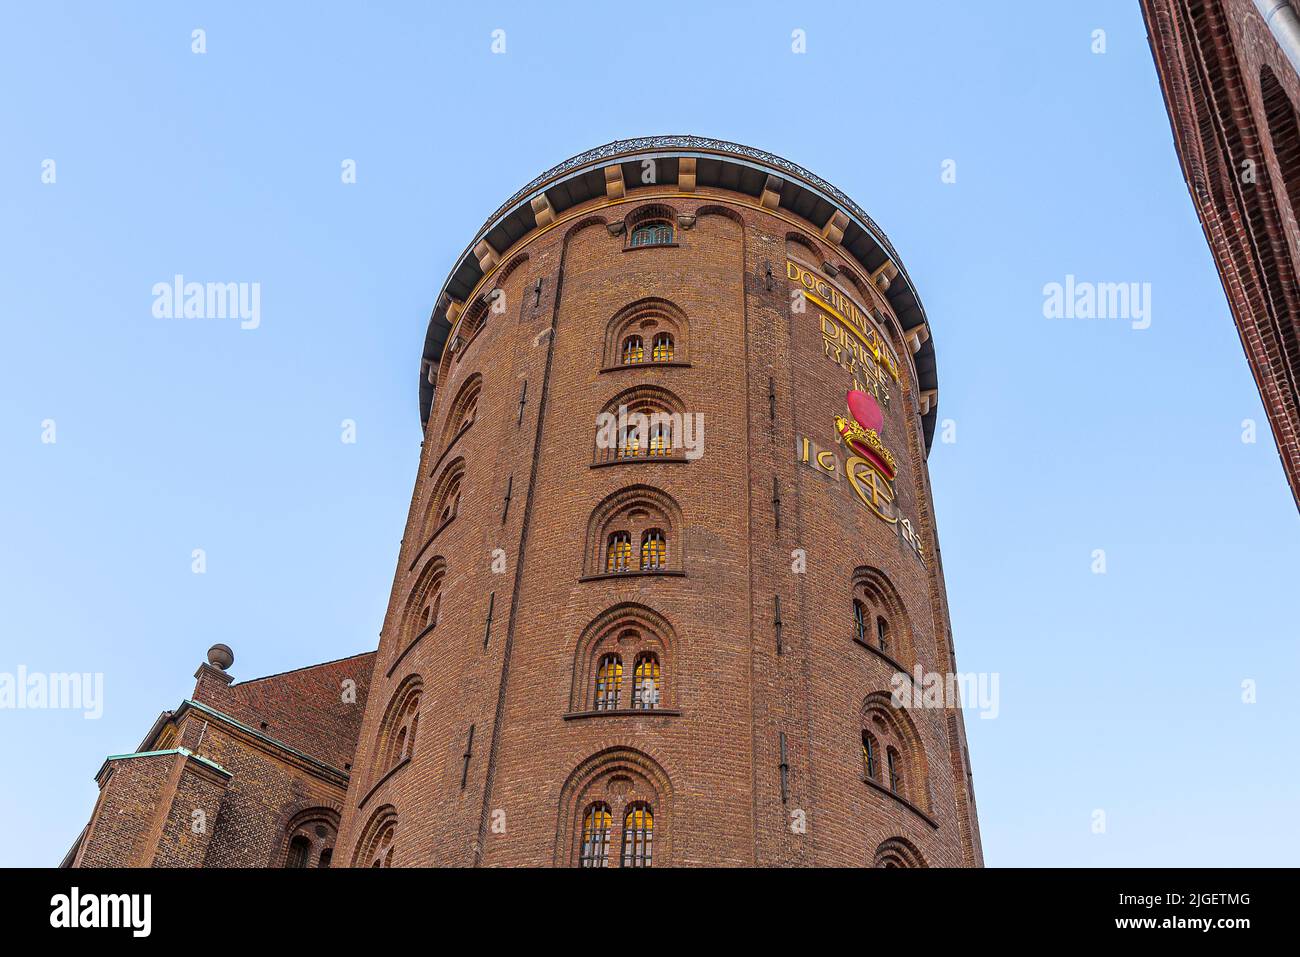 Ikonisches Gebäude der Rundturm wurde 1637 vom König Christian IV. Erbaut, Kopenhagen, 6. September 2021 Stockfoto